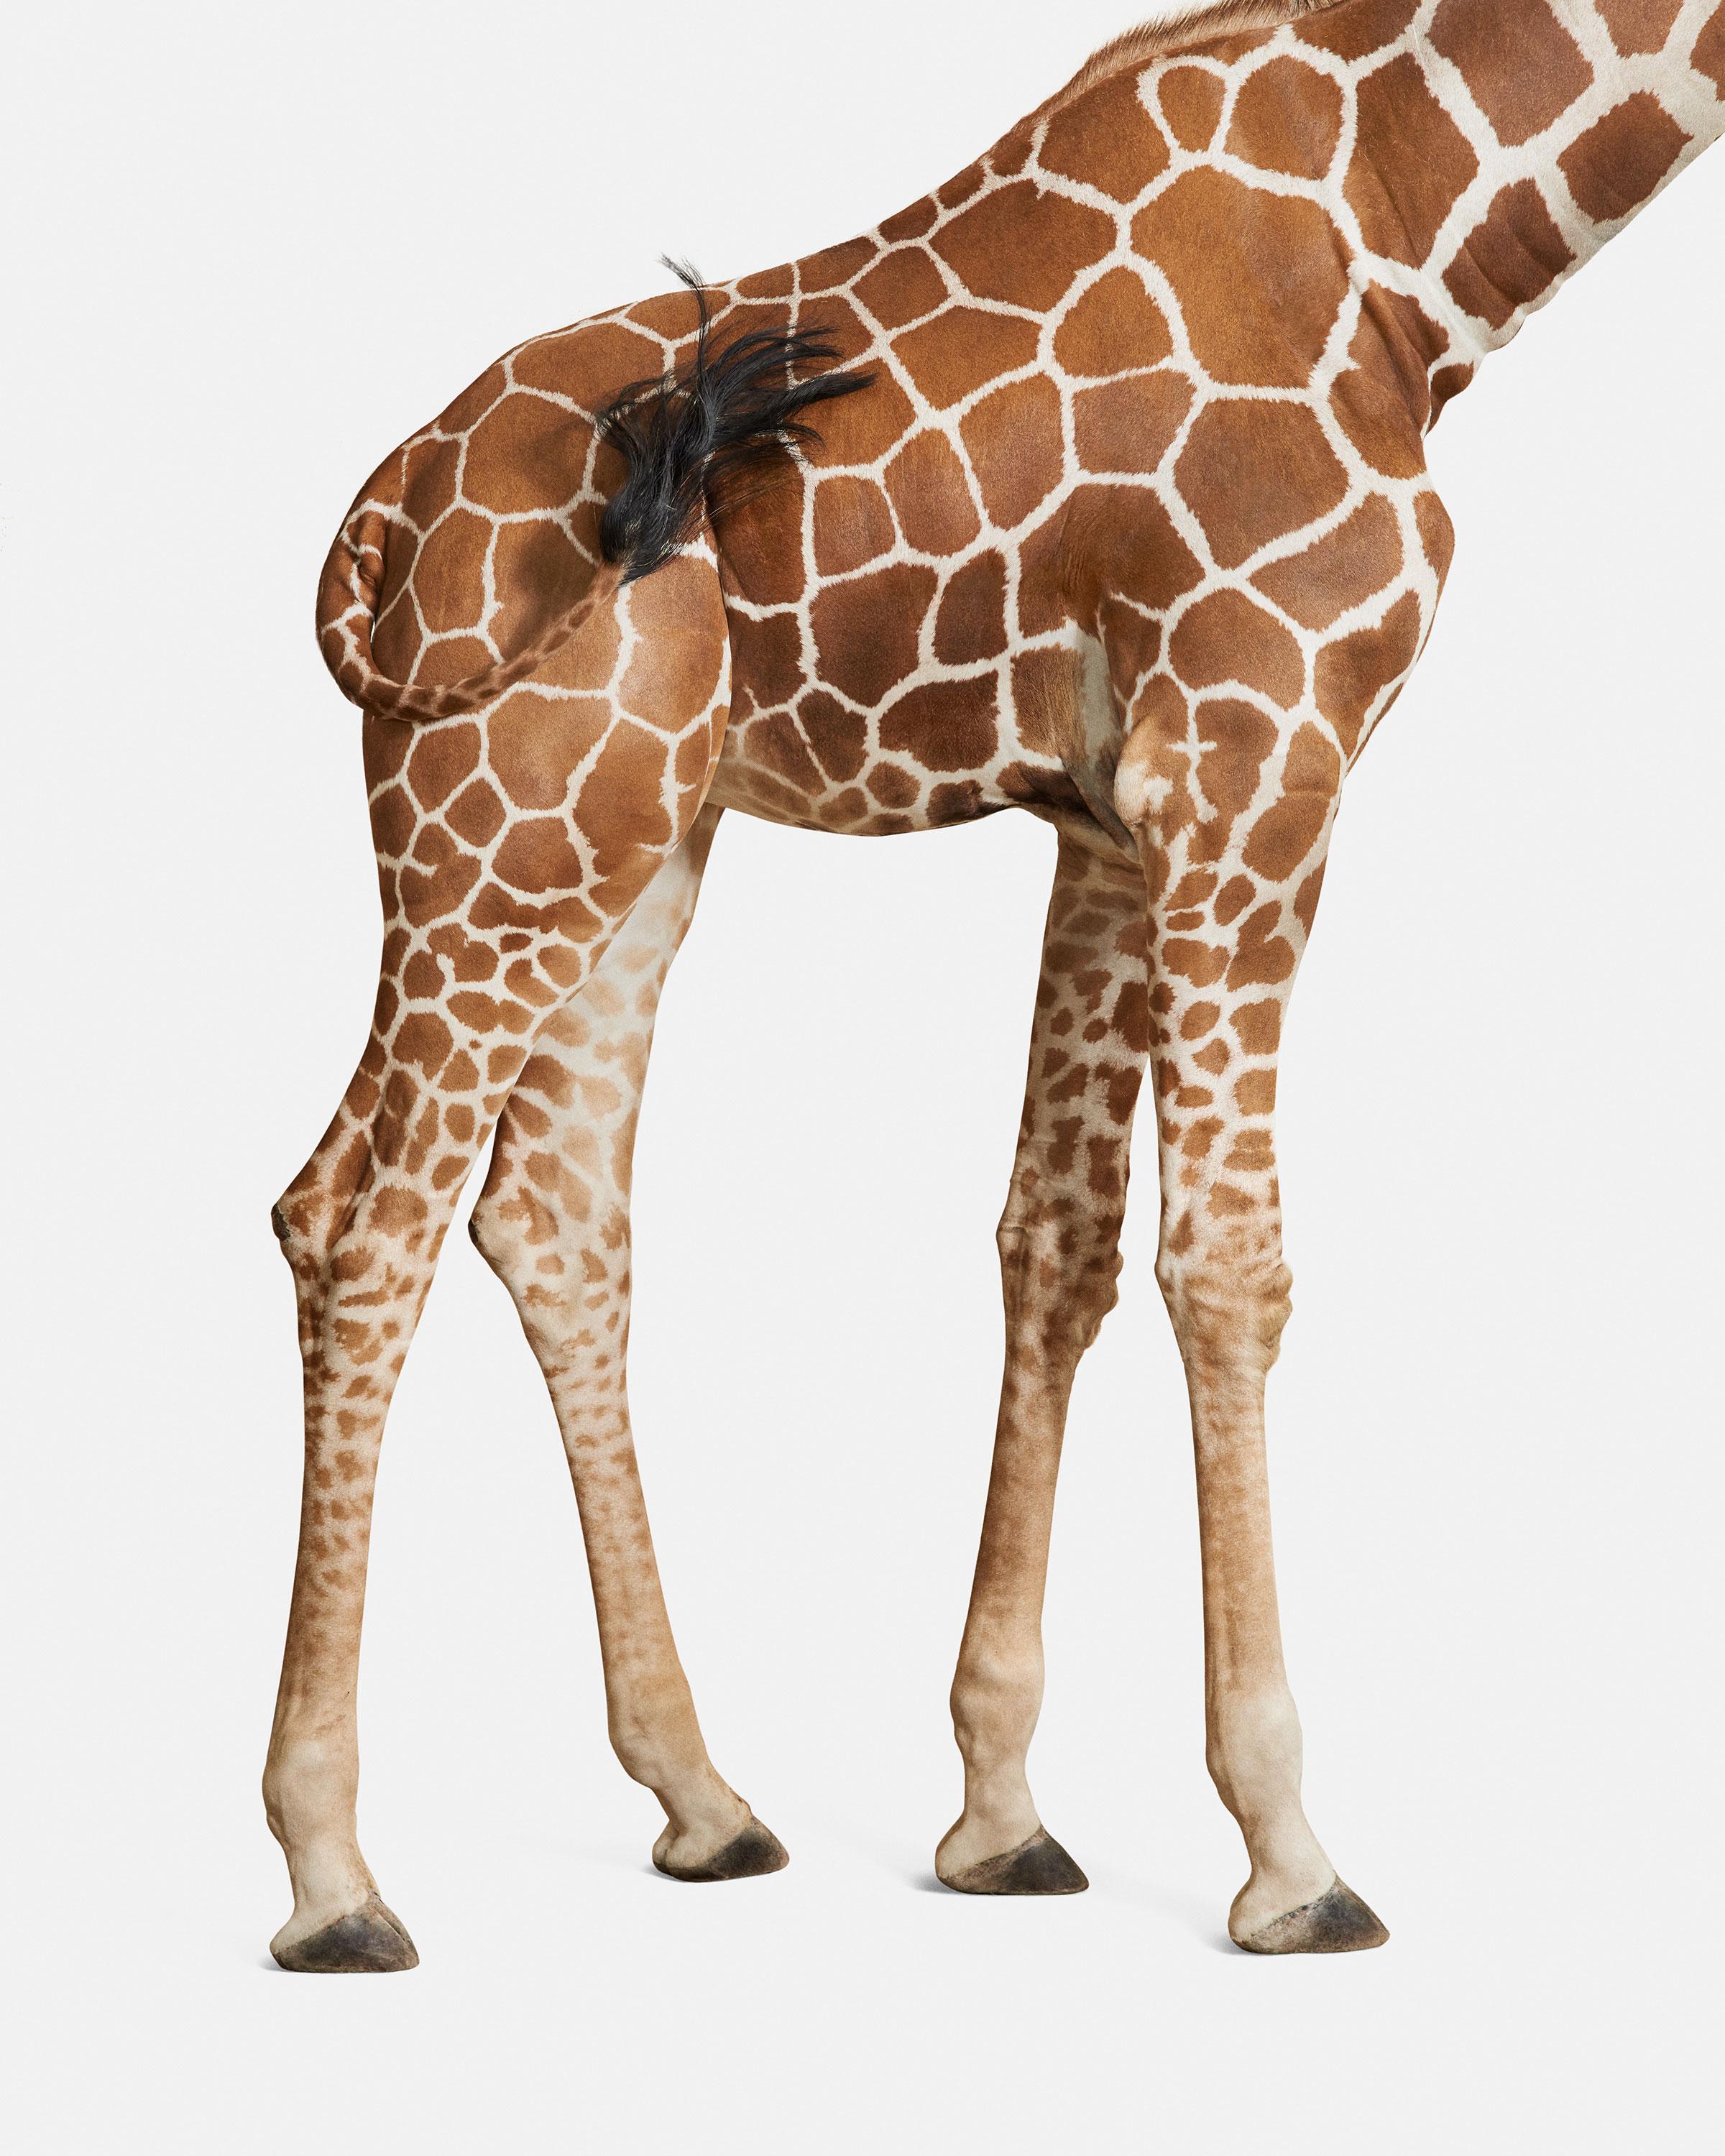 Randal Ford Color Photograph - Giraffe No. 3 (60" x 48")